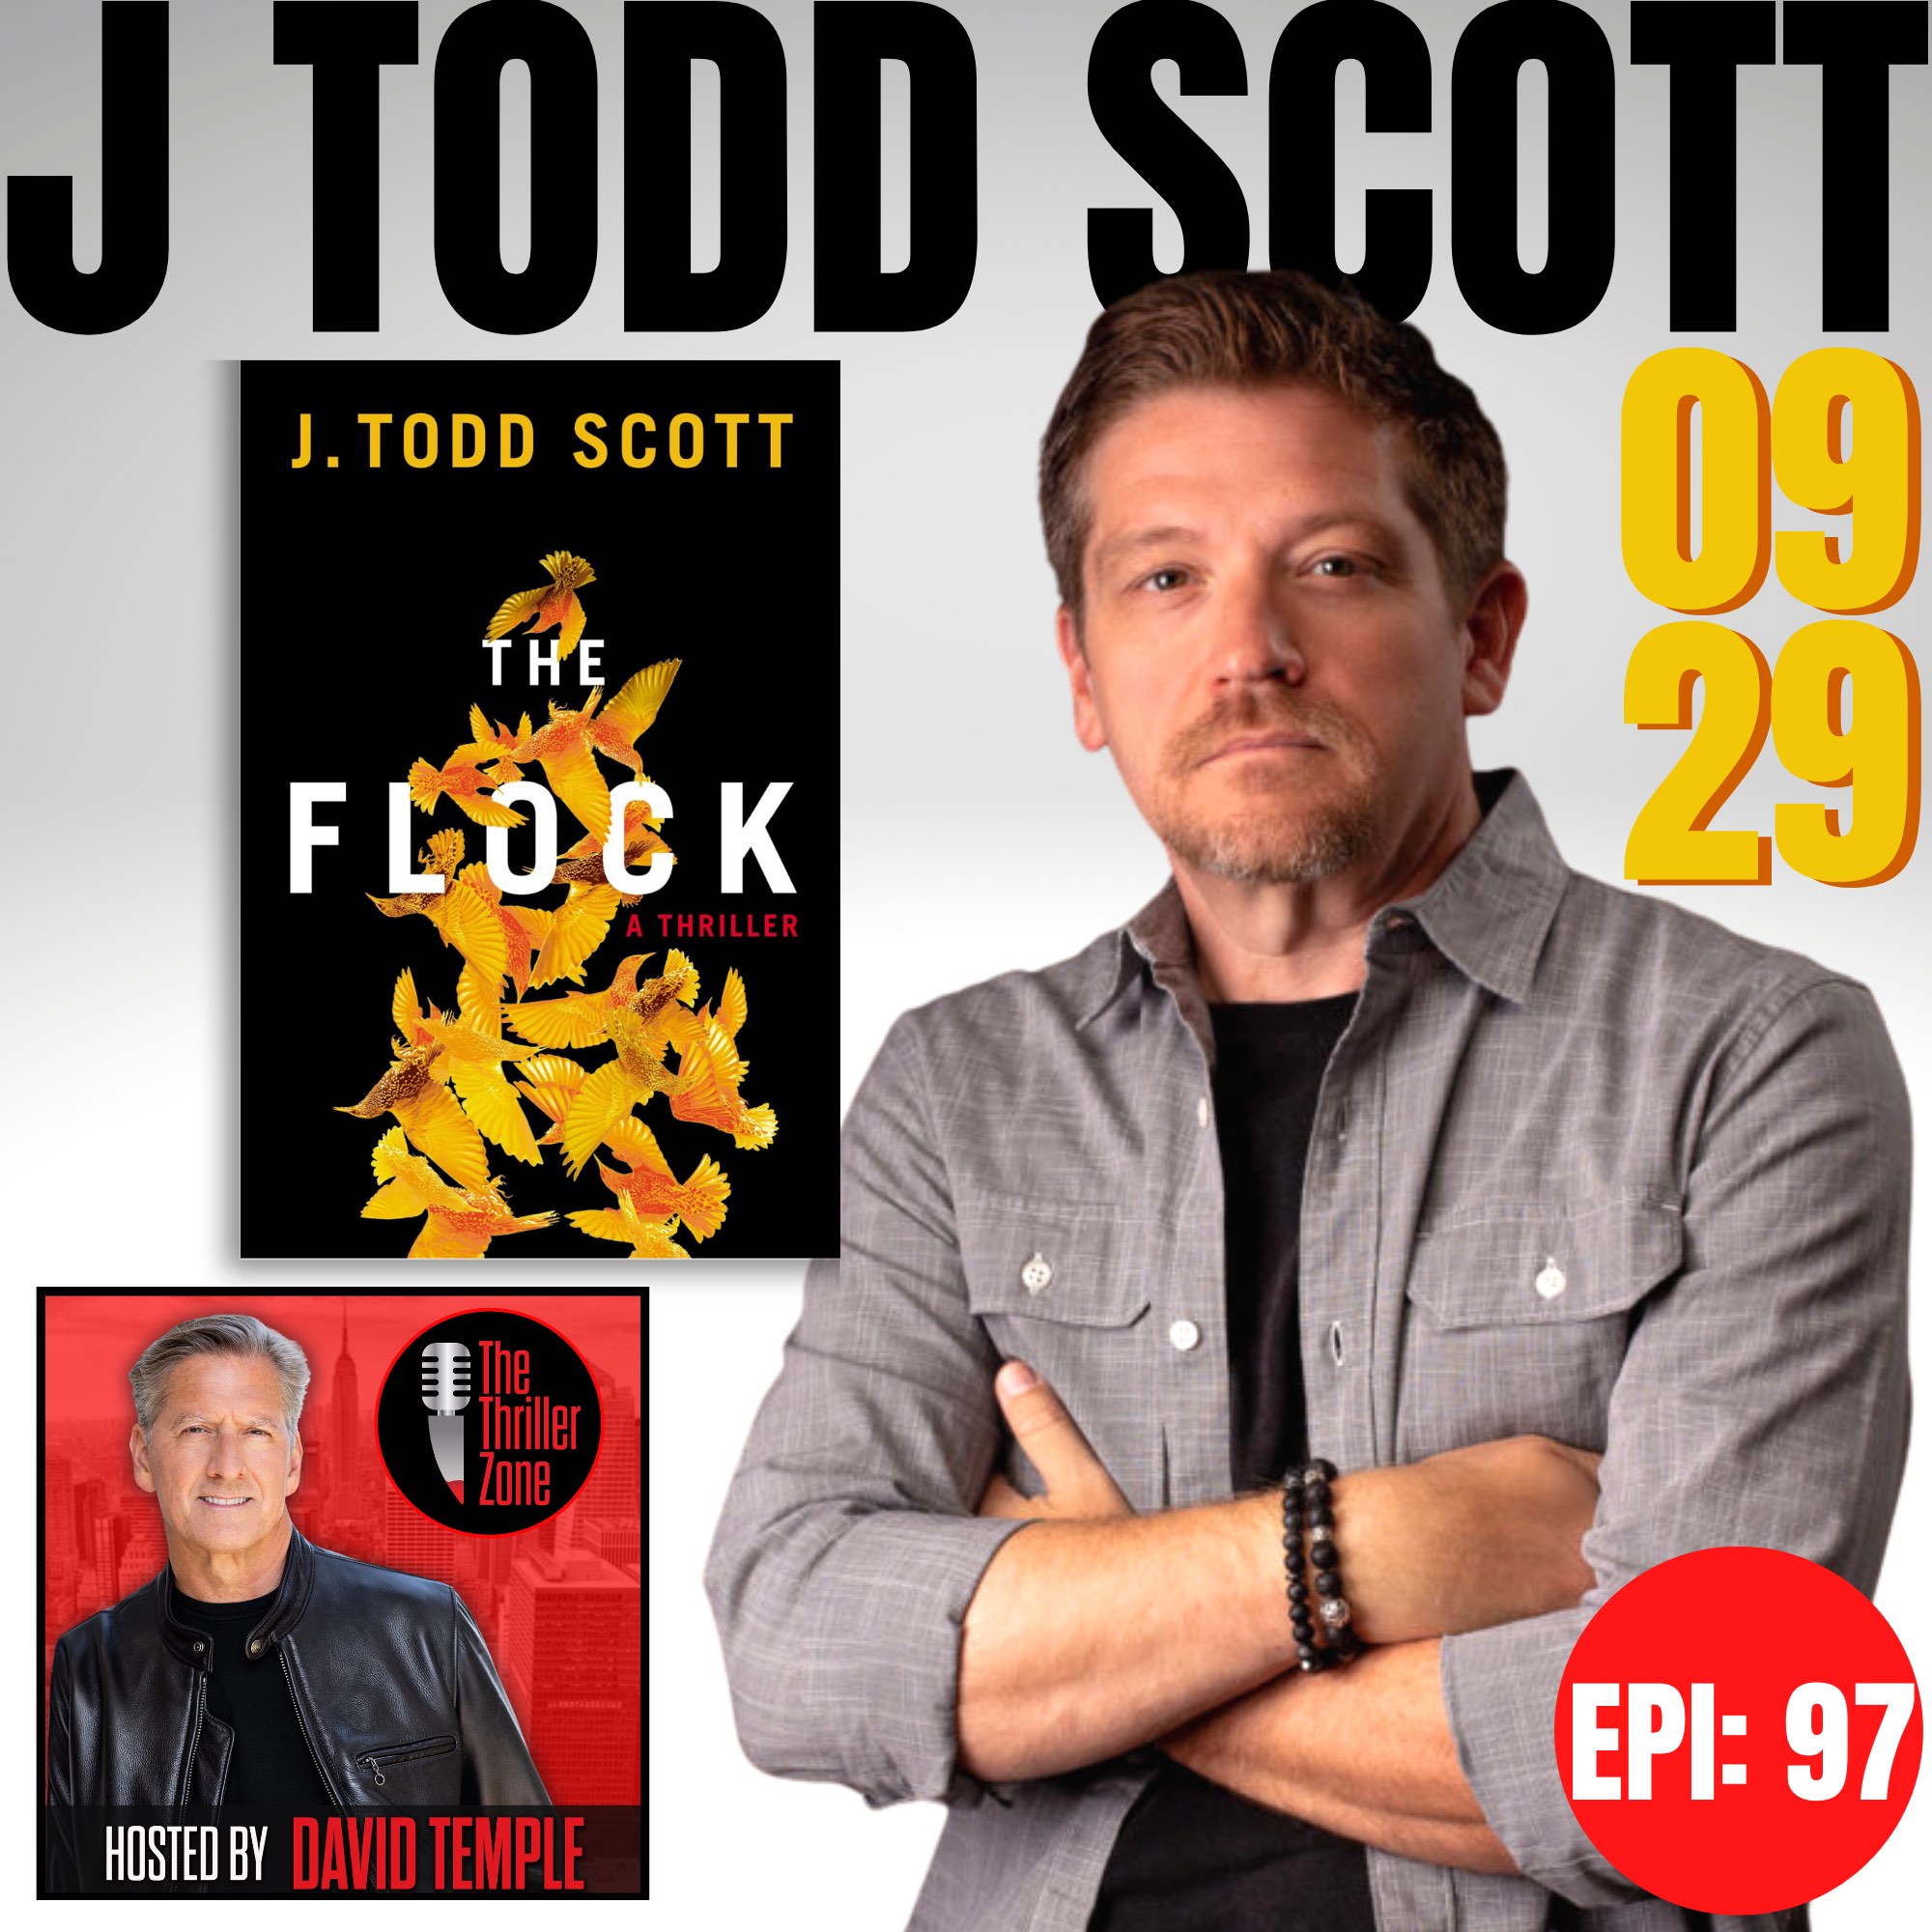 J Todd Scott, author of The Flock Image